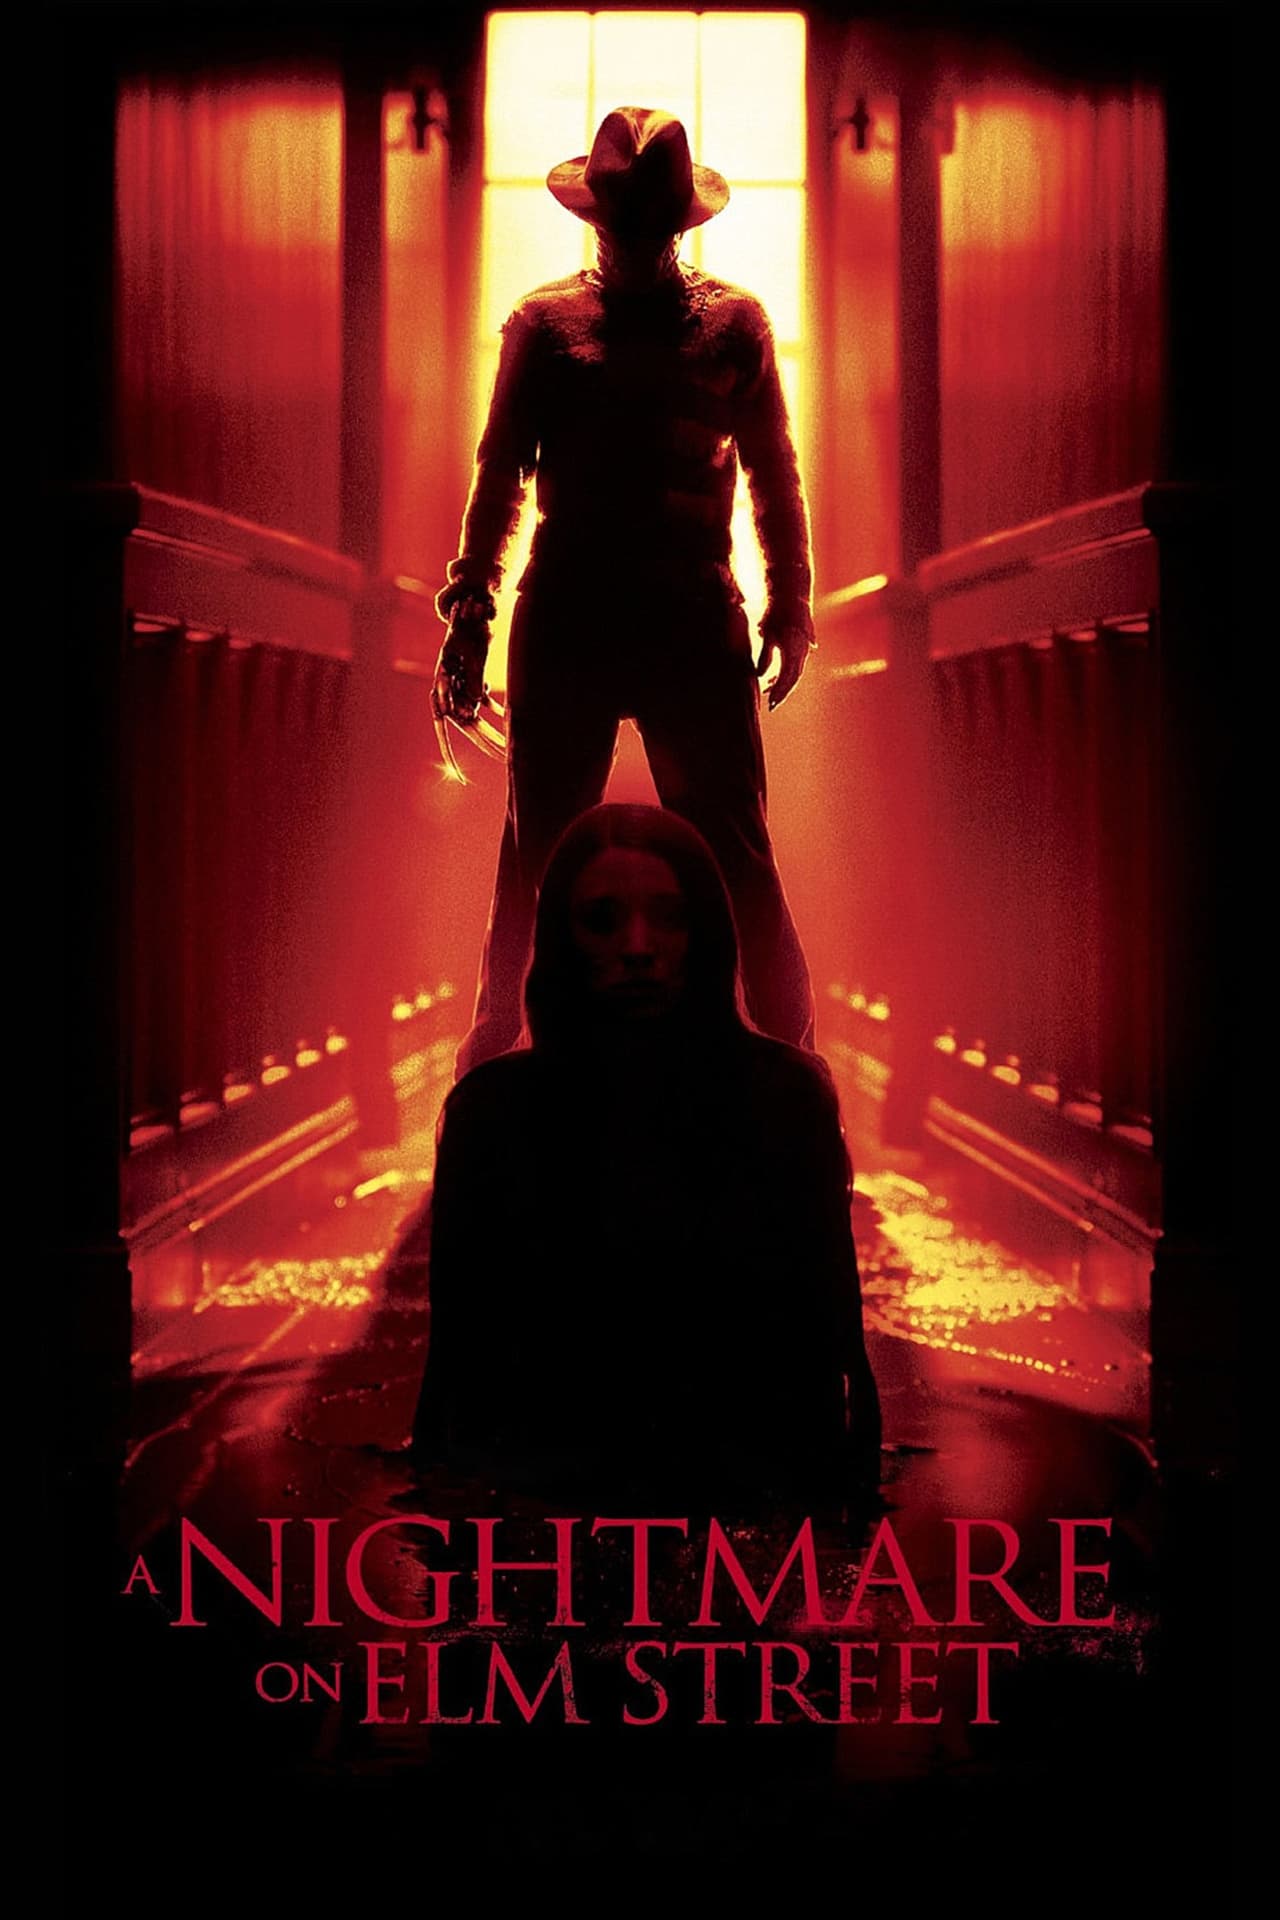 A Nightmare on Elm Street 9 poster